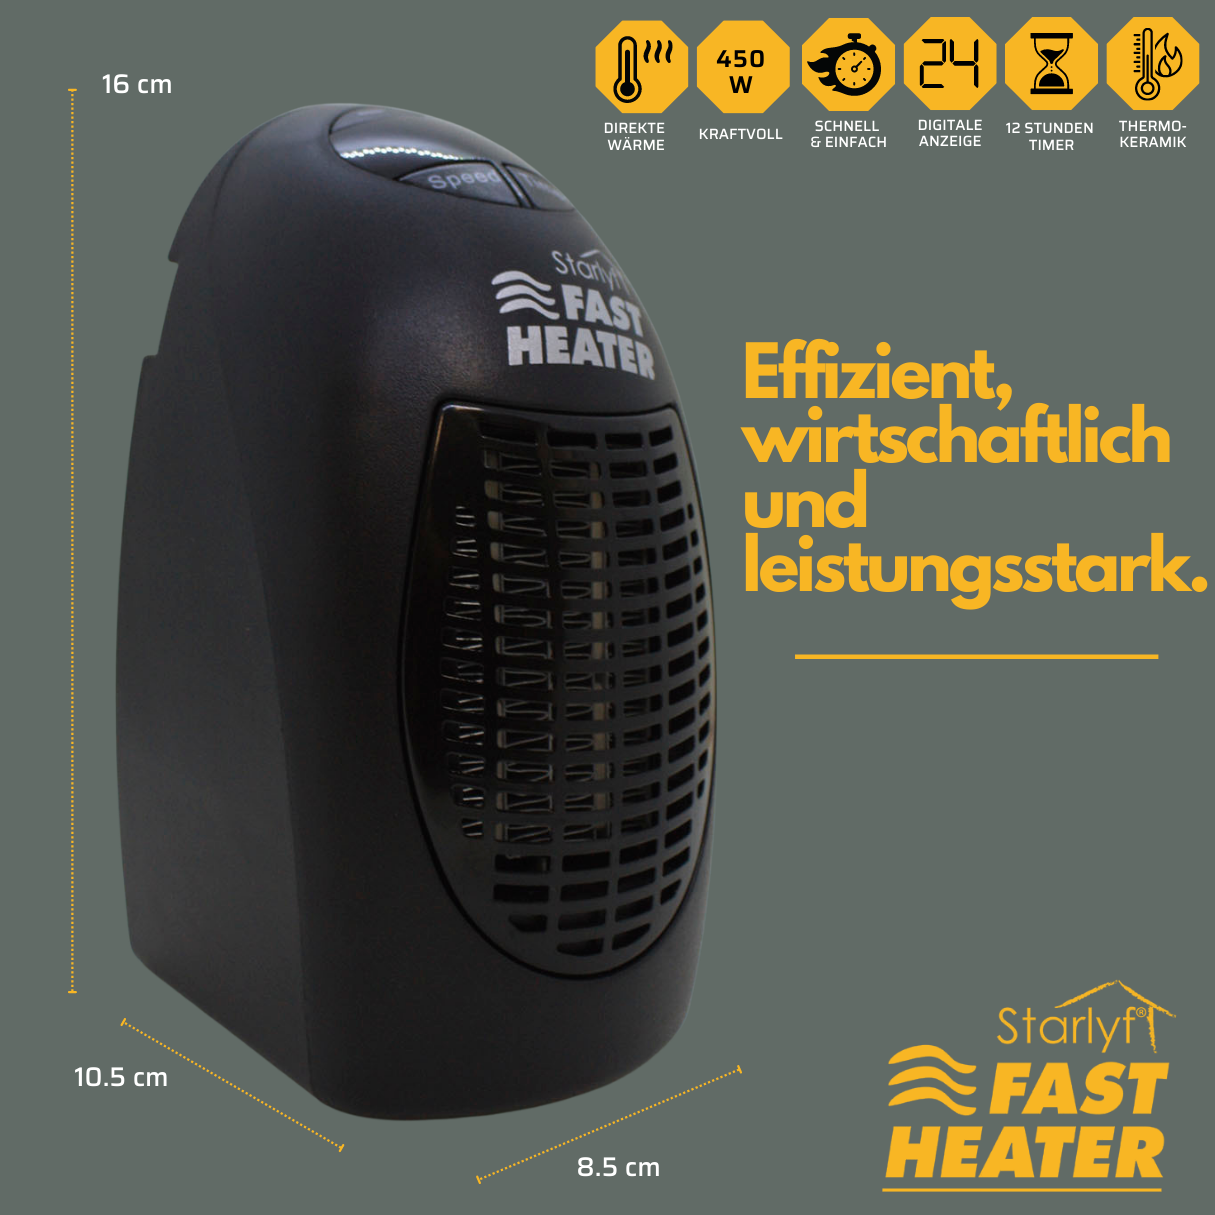 Watt, 15 STARLYF Raumgröße: m²) Fast (400 Schwarz Heizlüfter Heater